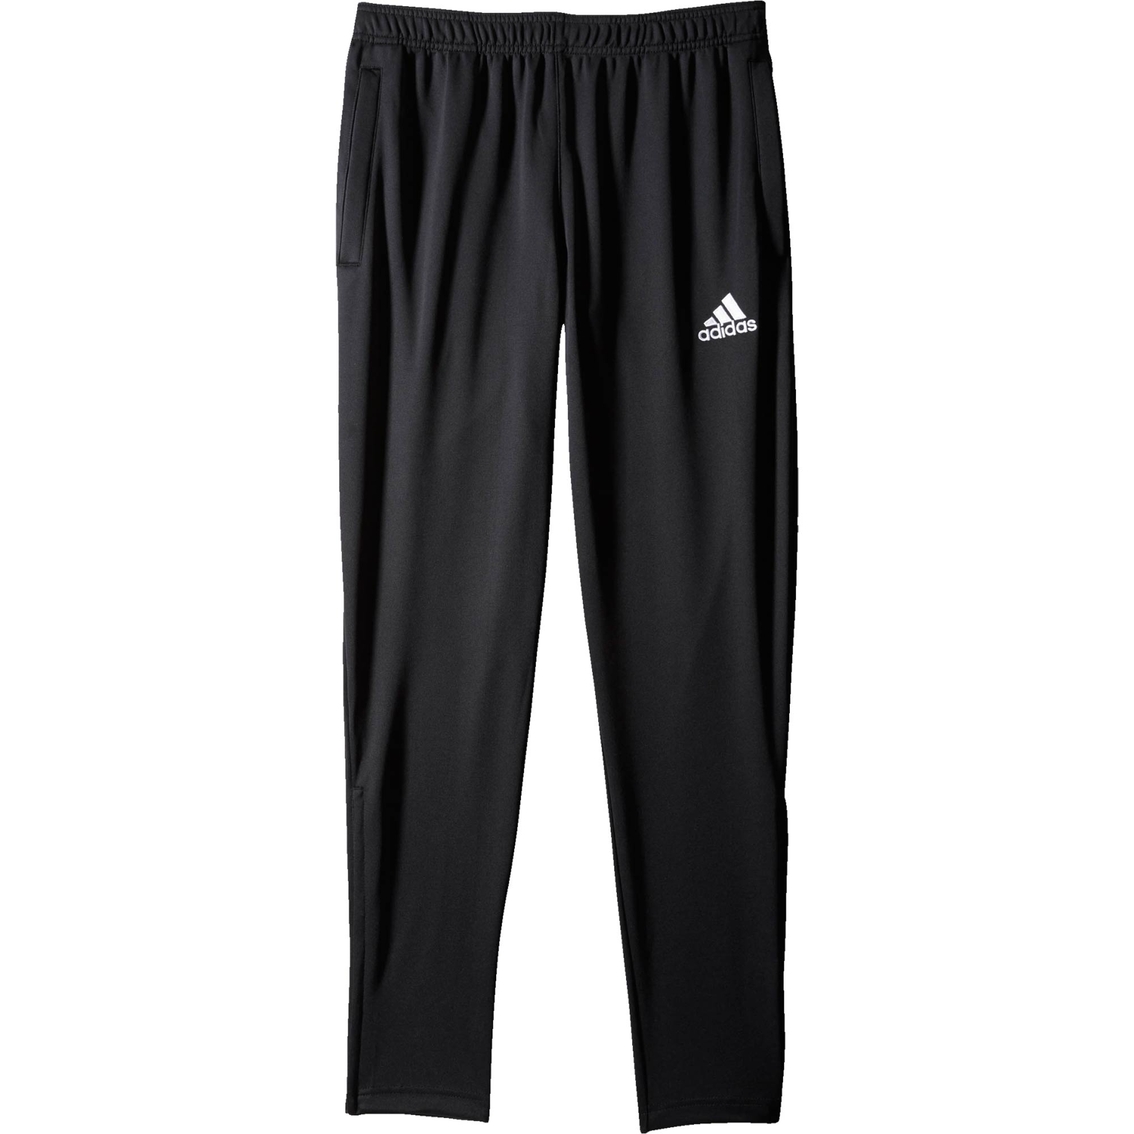 Adidas Core 15 Training Pants | Pants | Clothing & Accessories | Shop ...